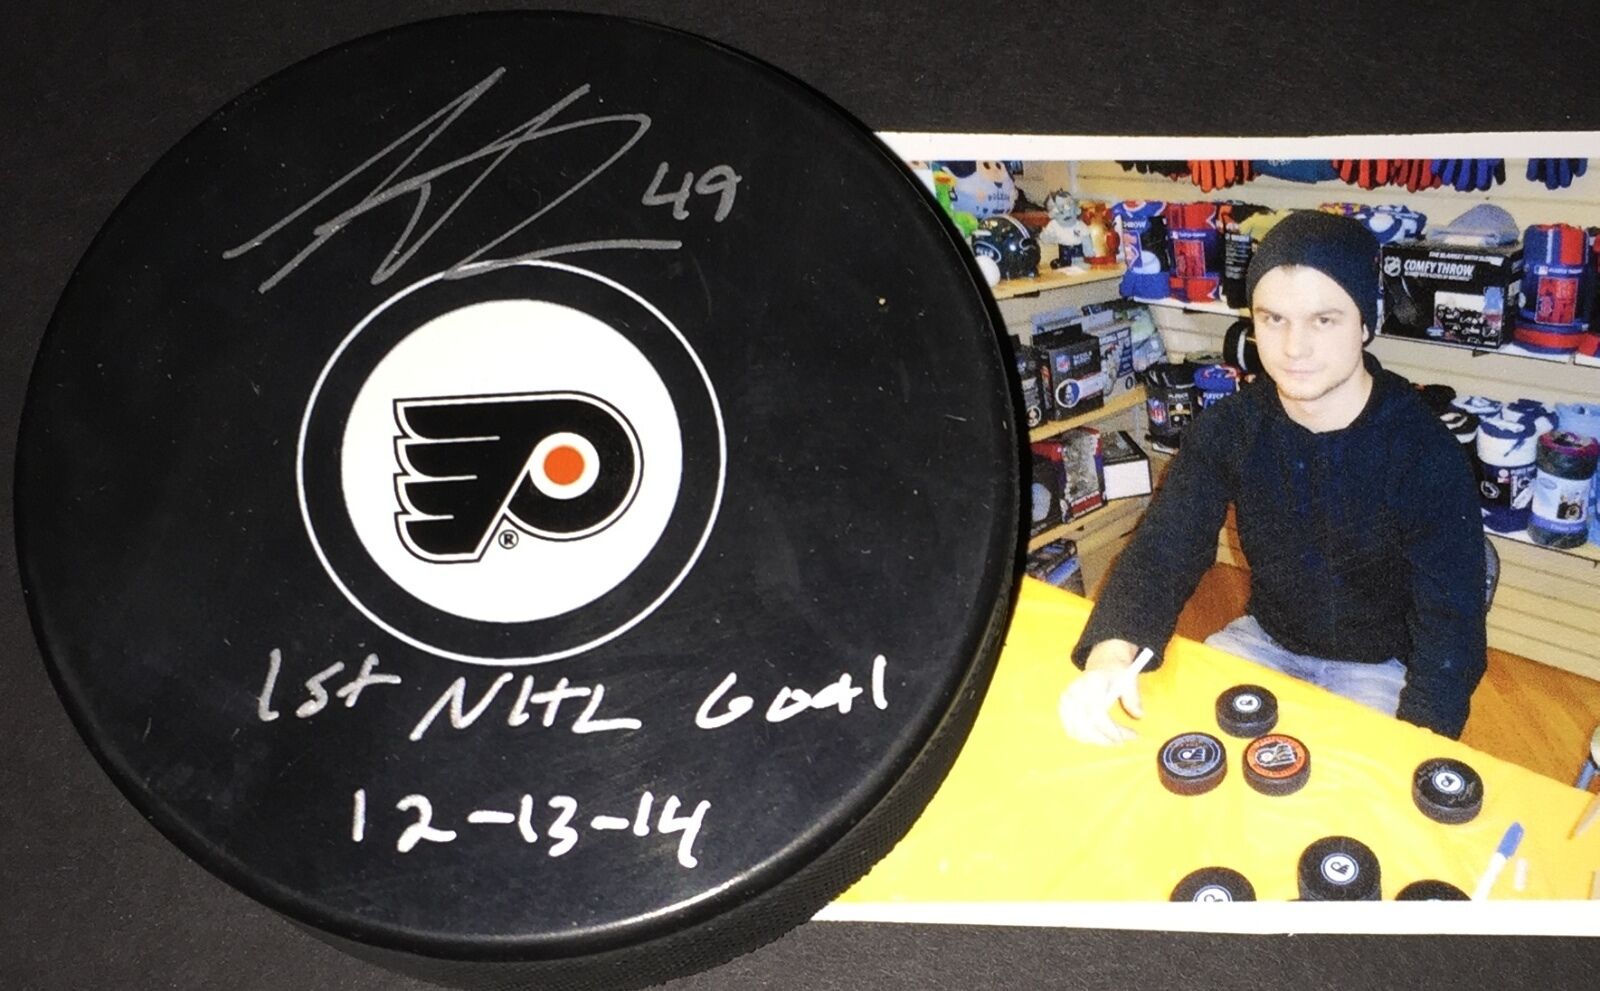 Scott Laughton Flyers Autographed Signed Puck 1st NHL Goal 12-13-14 A